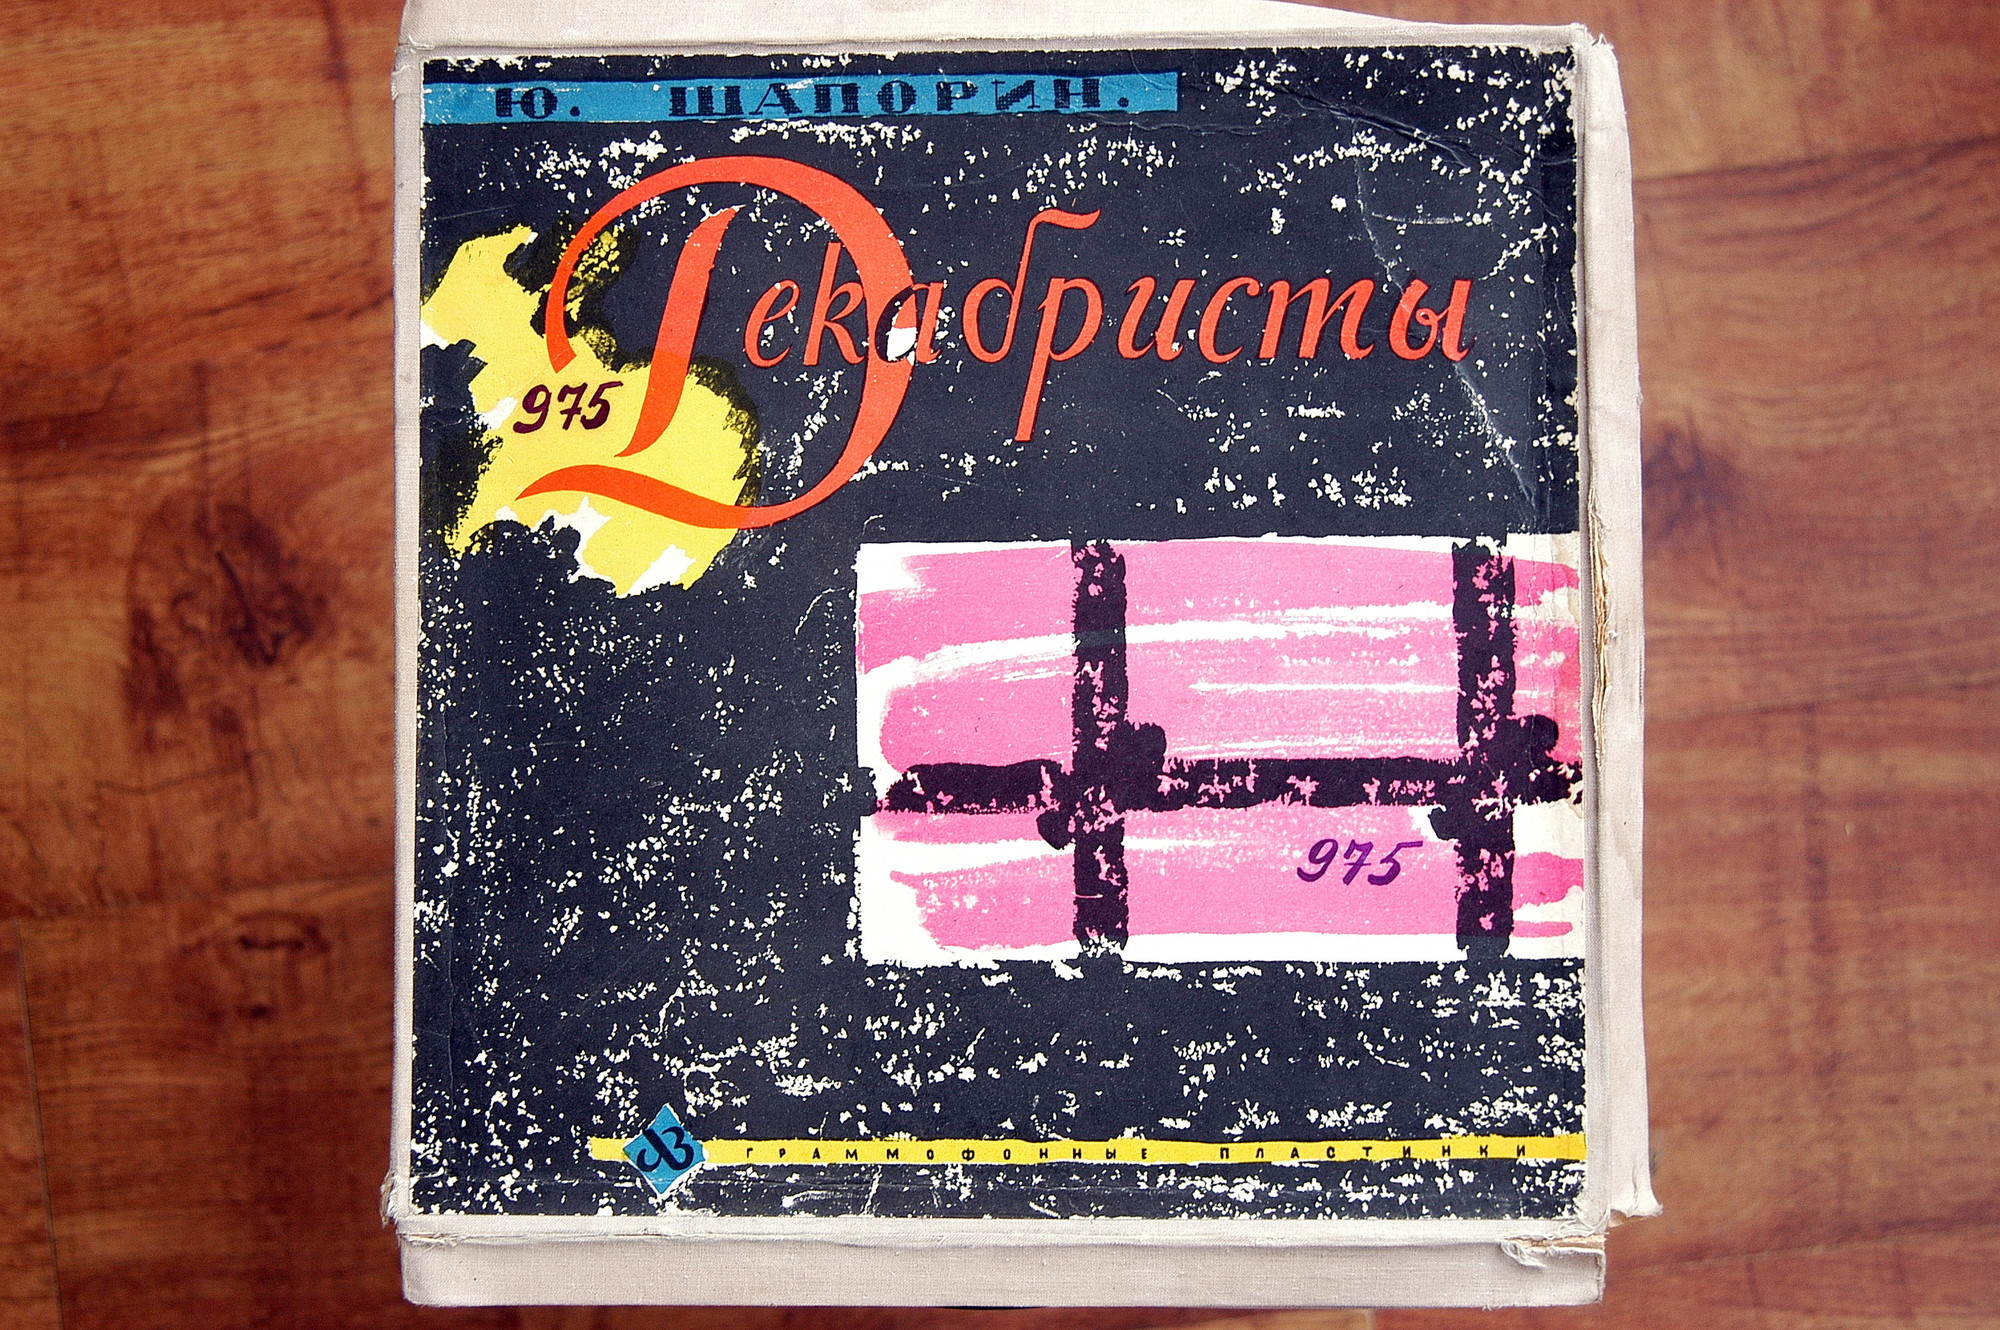 Ю. ШАПОРИН (1887-1966) "Декабристы": опера в 3 д. (ГАБТ, А. Мелик-Пашаев)